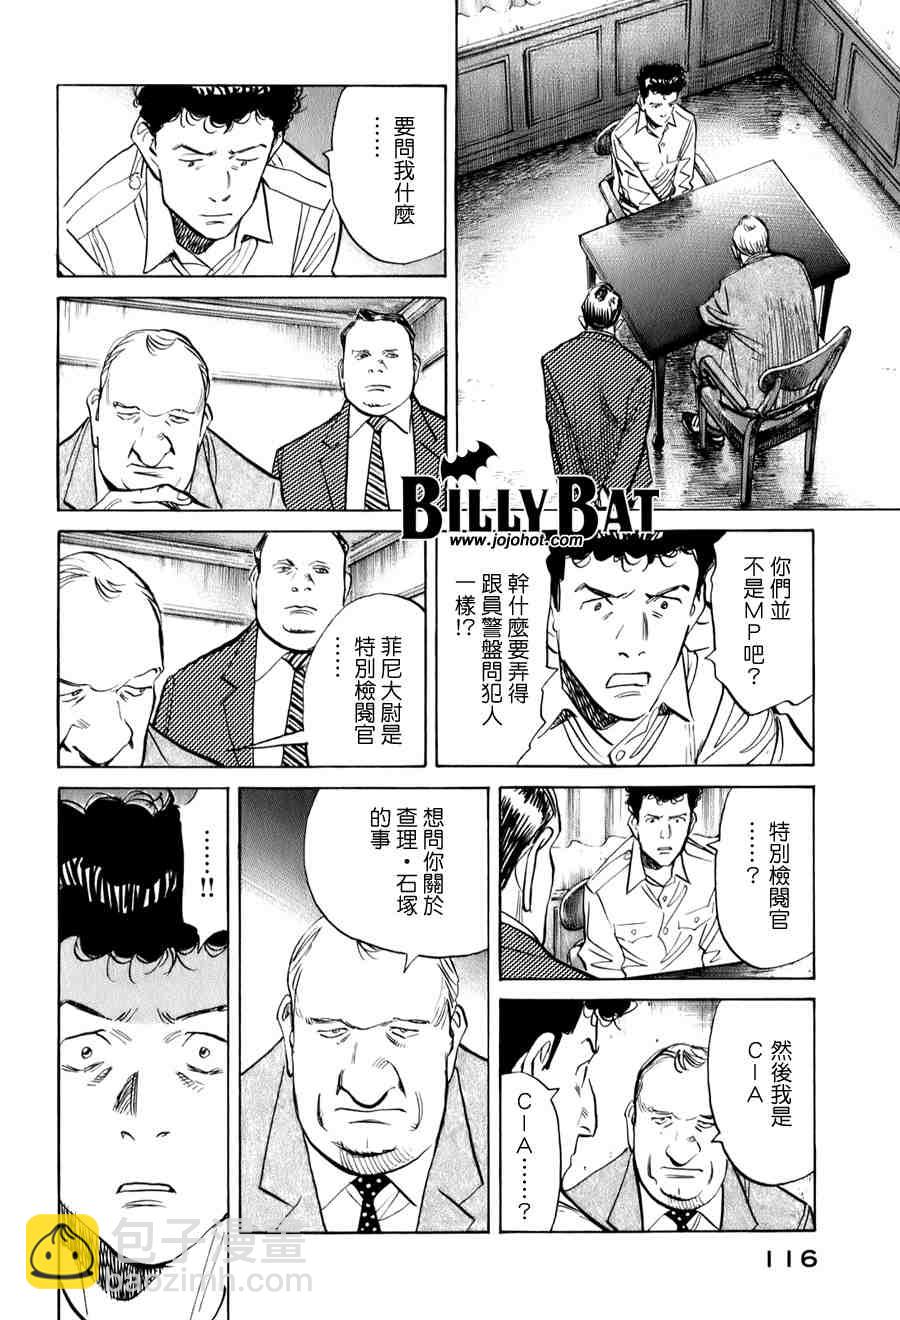 Billy_Bat - 第1卷(3/4) - 3